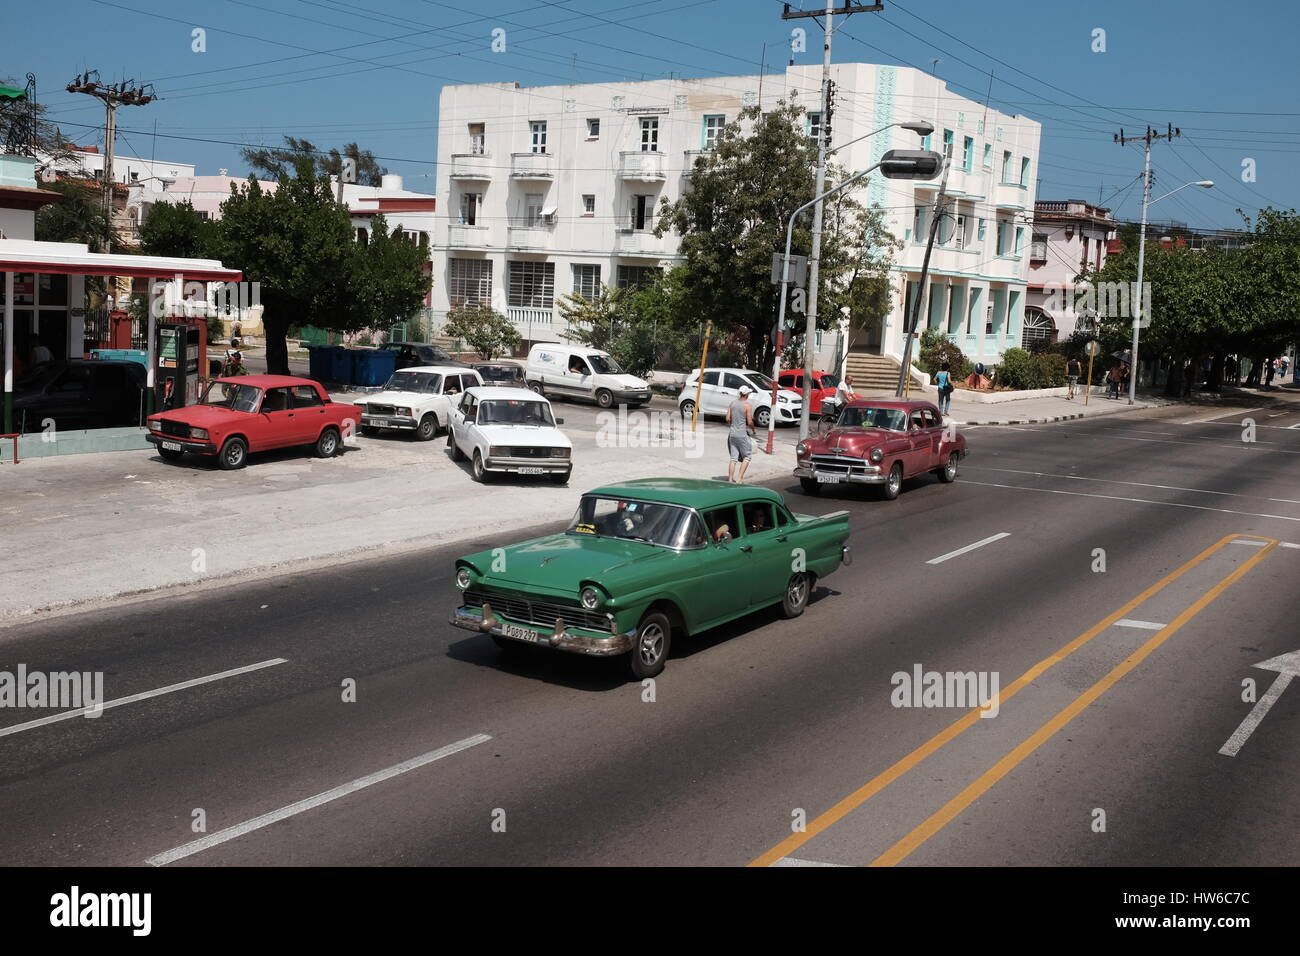 Street scene with classic cars Havana Cuba 2017 Stock Photo